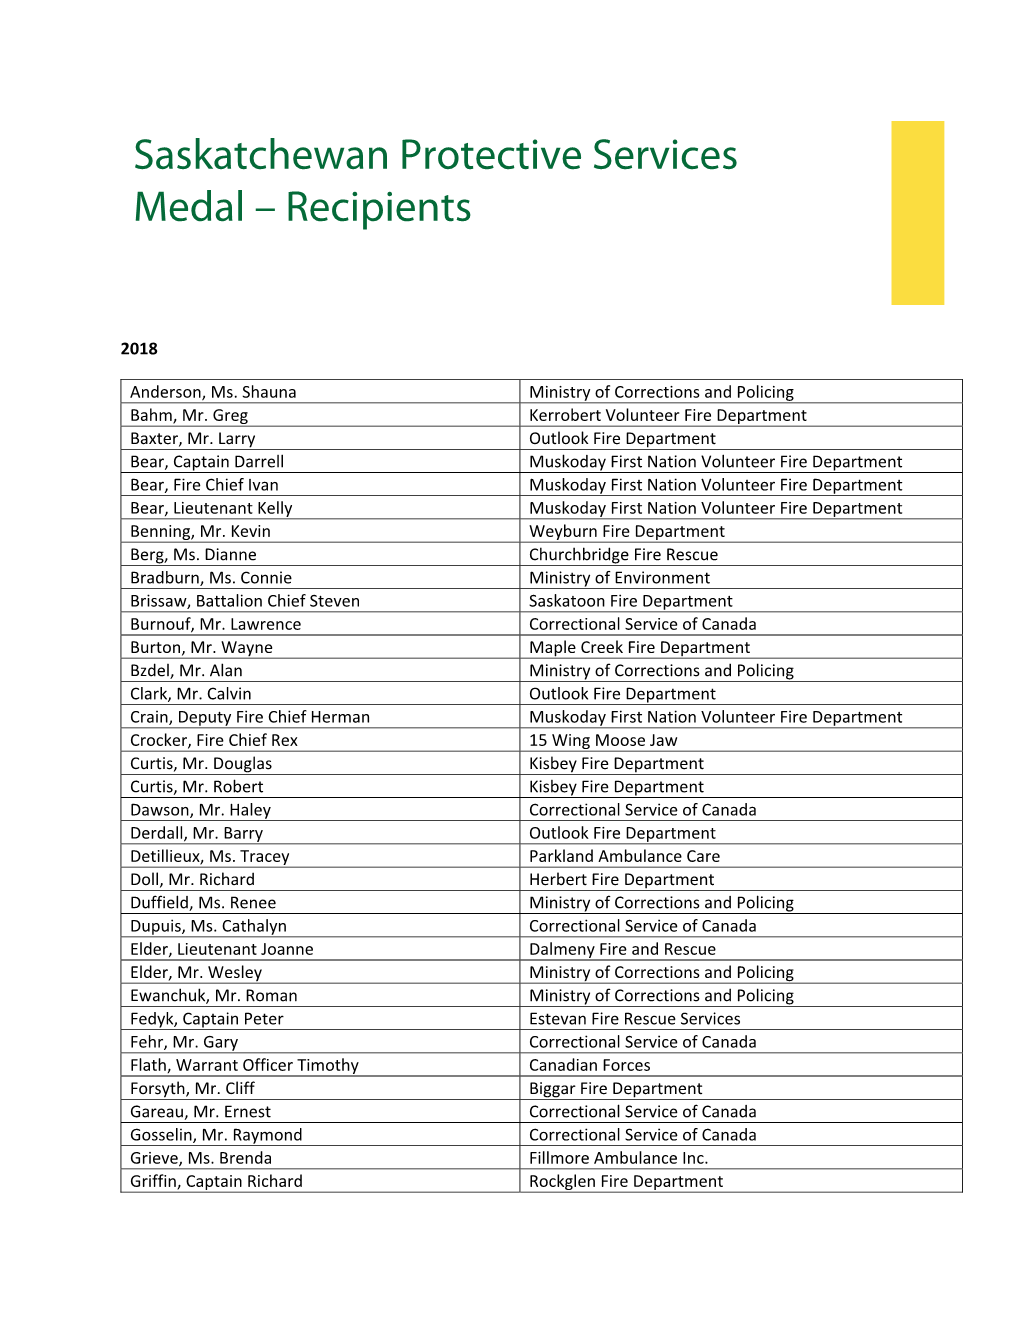 Saskatchewan Protective Services Medal – Recipients